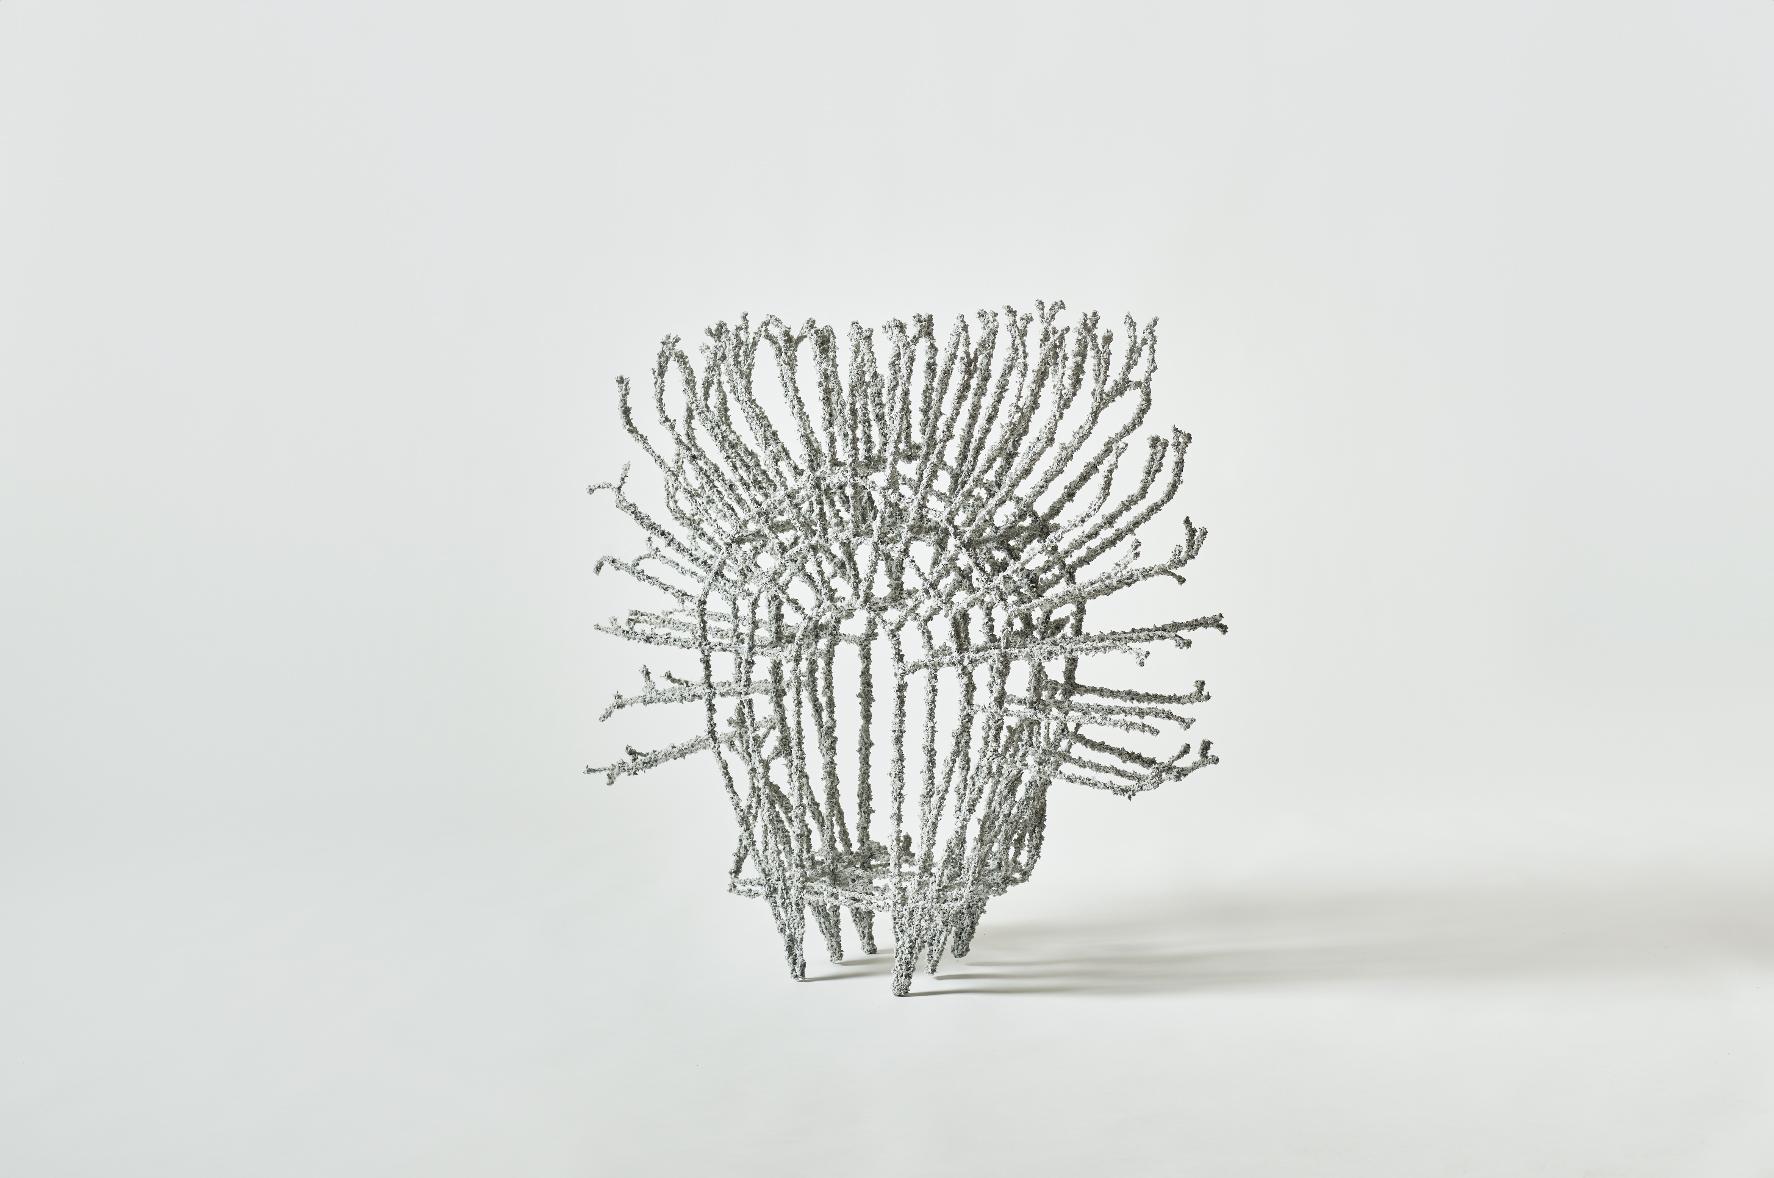 Rae Betonskulptur von Fransje Gimbrere
3D gewebte hängende/stehende Skulptur
Abmessungen: L 70 x B 70 x T 25 cm
MATERIALIEN: Glasfaser, Recyclingpapier, biologisch abbaubarer Klebstoff

Fransje Gimbrère ist eine multidisziplinäre Designerin und Art